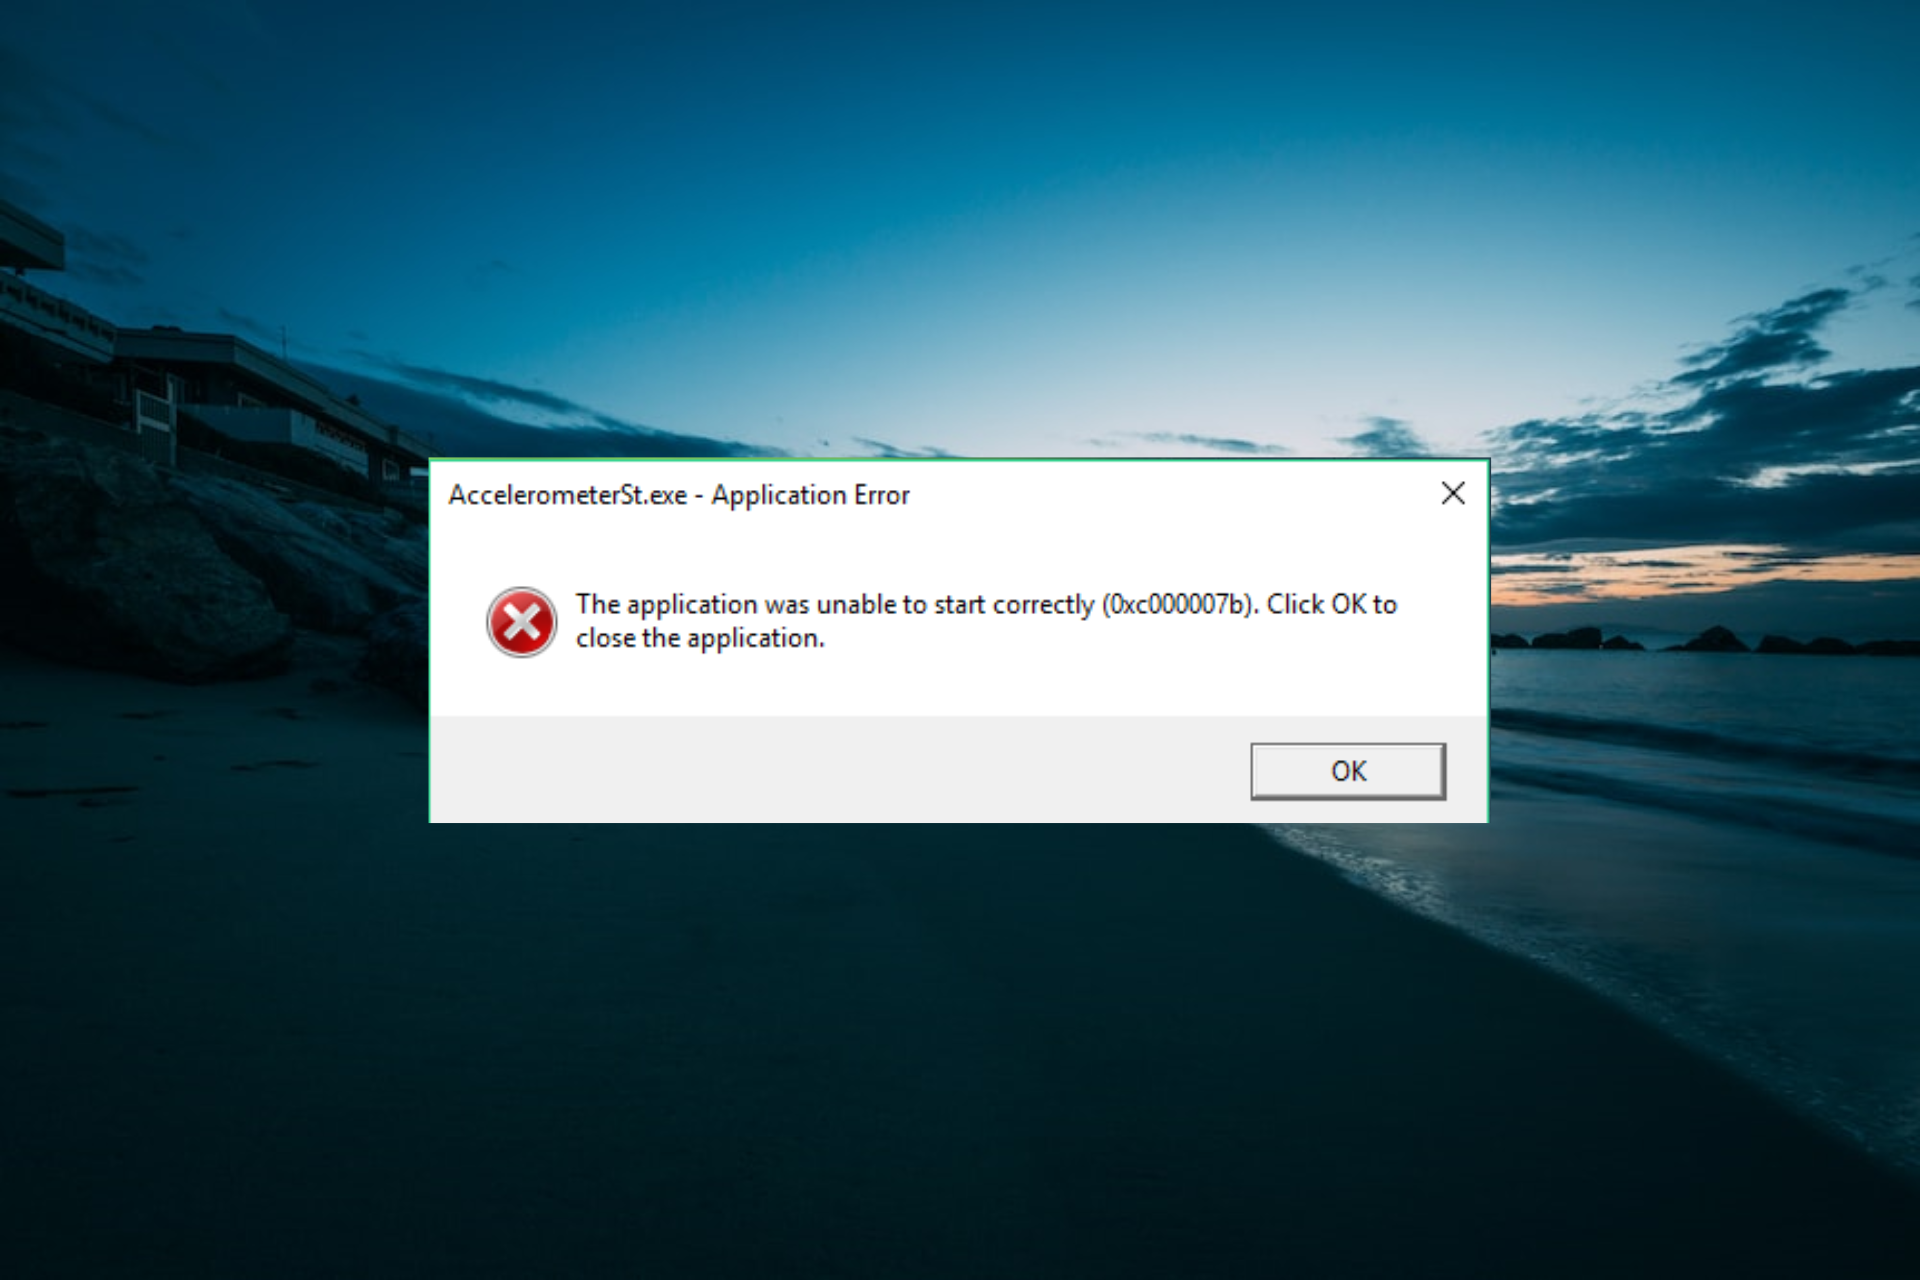 Accelerometerst.exe application error Windows 10